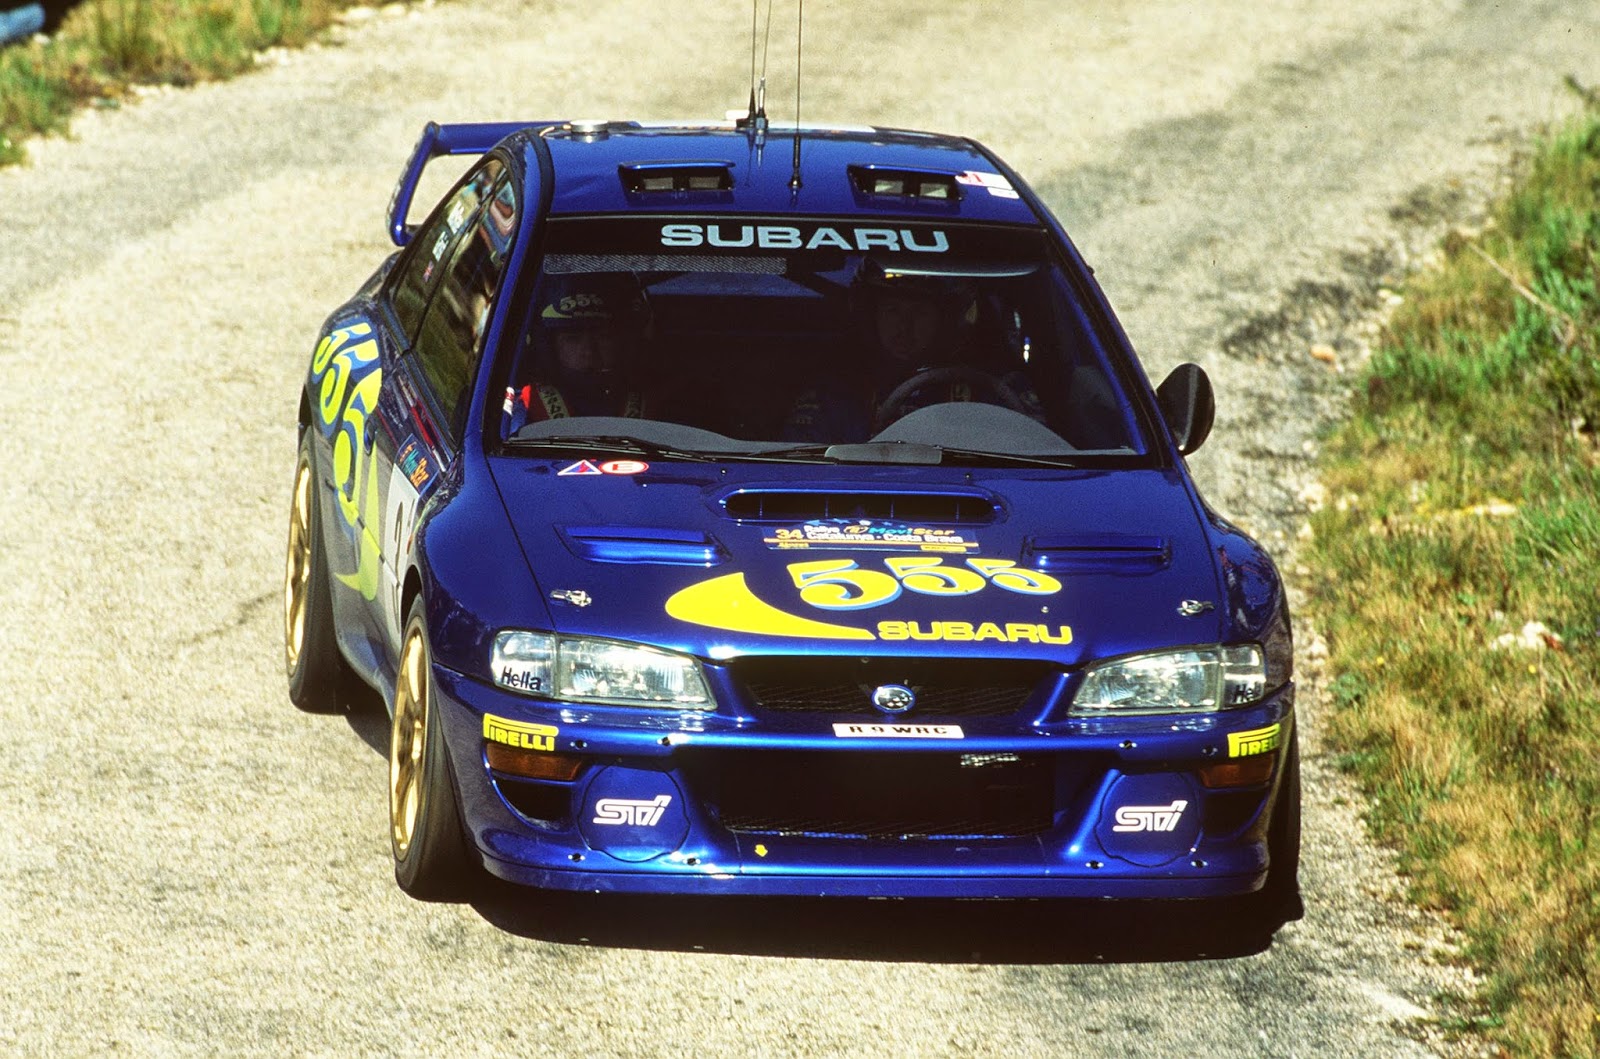 RBR Rally Design [RBR] Subaru Impreza WRC 98 Colin McRae